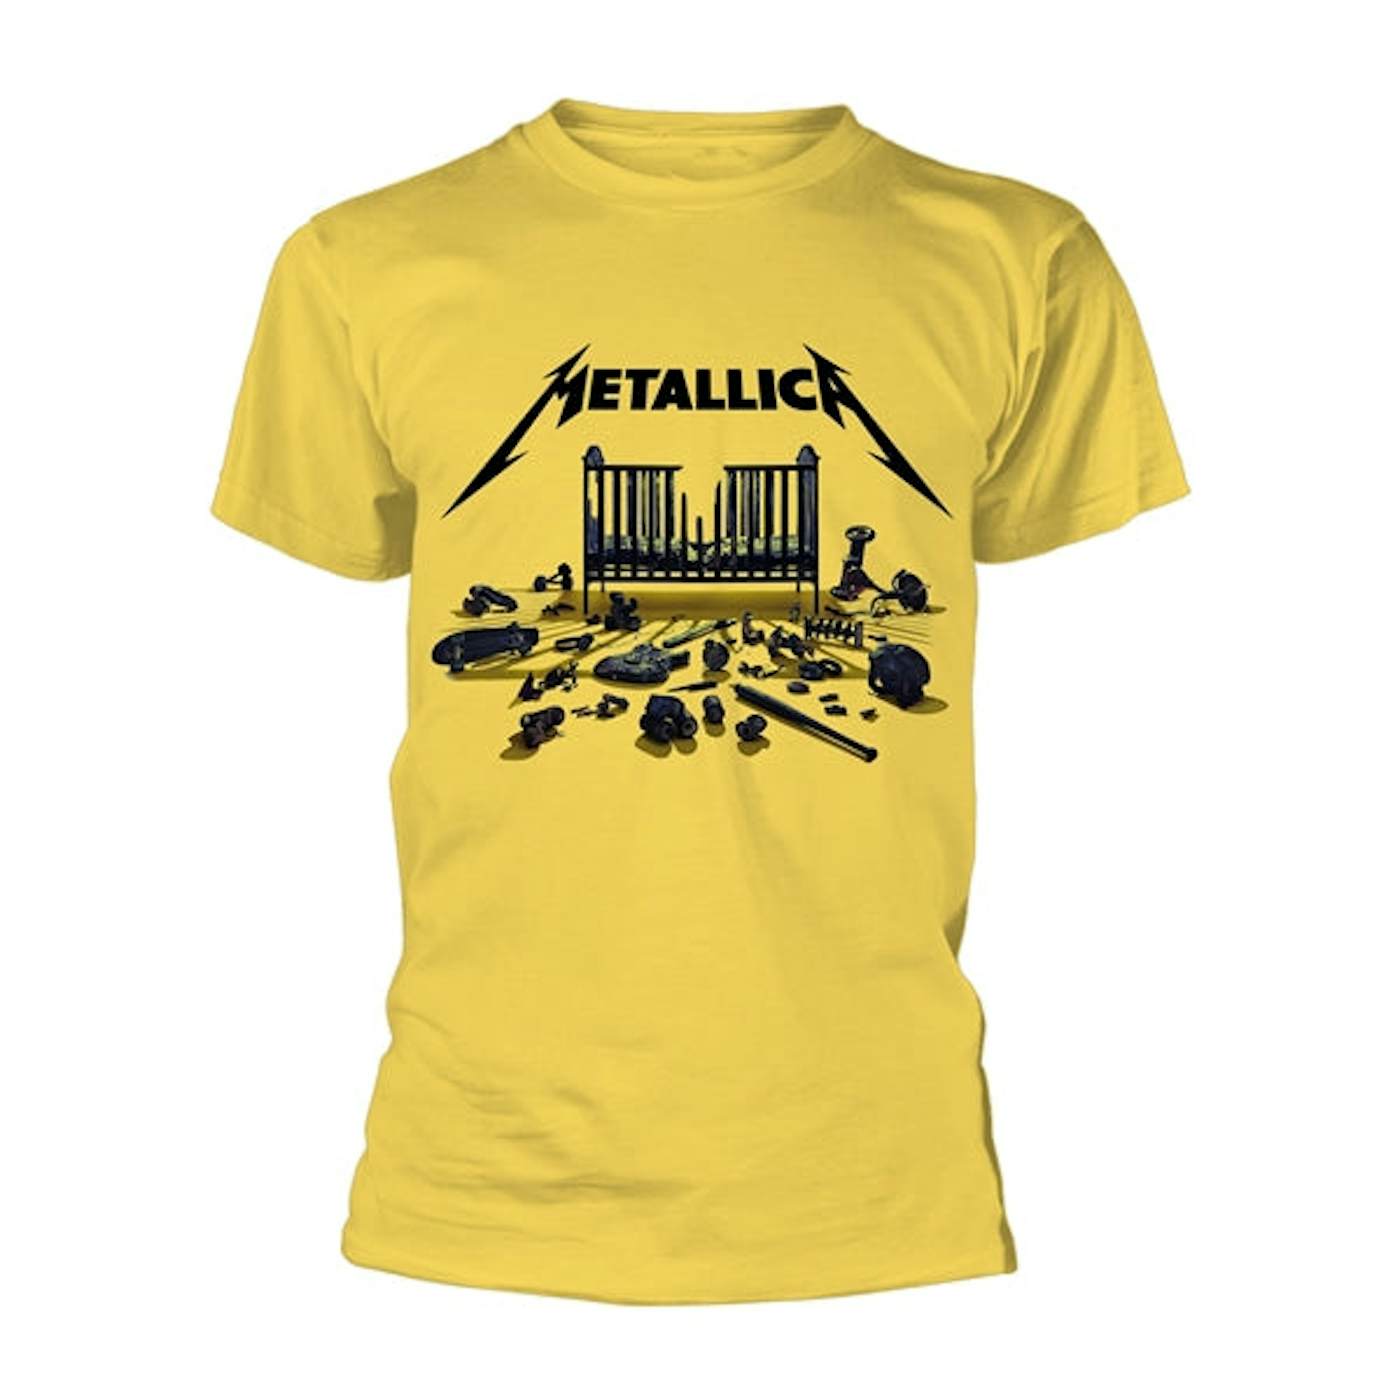  Metallica T Shirt - Simplified Cover